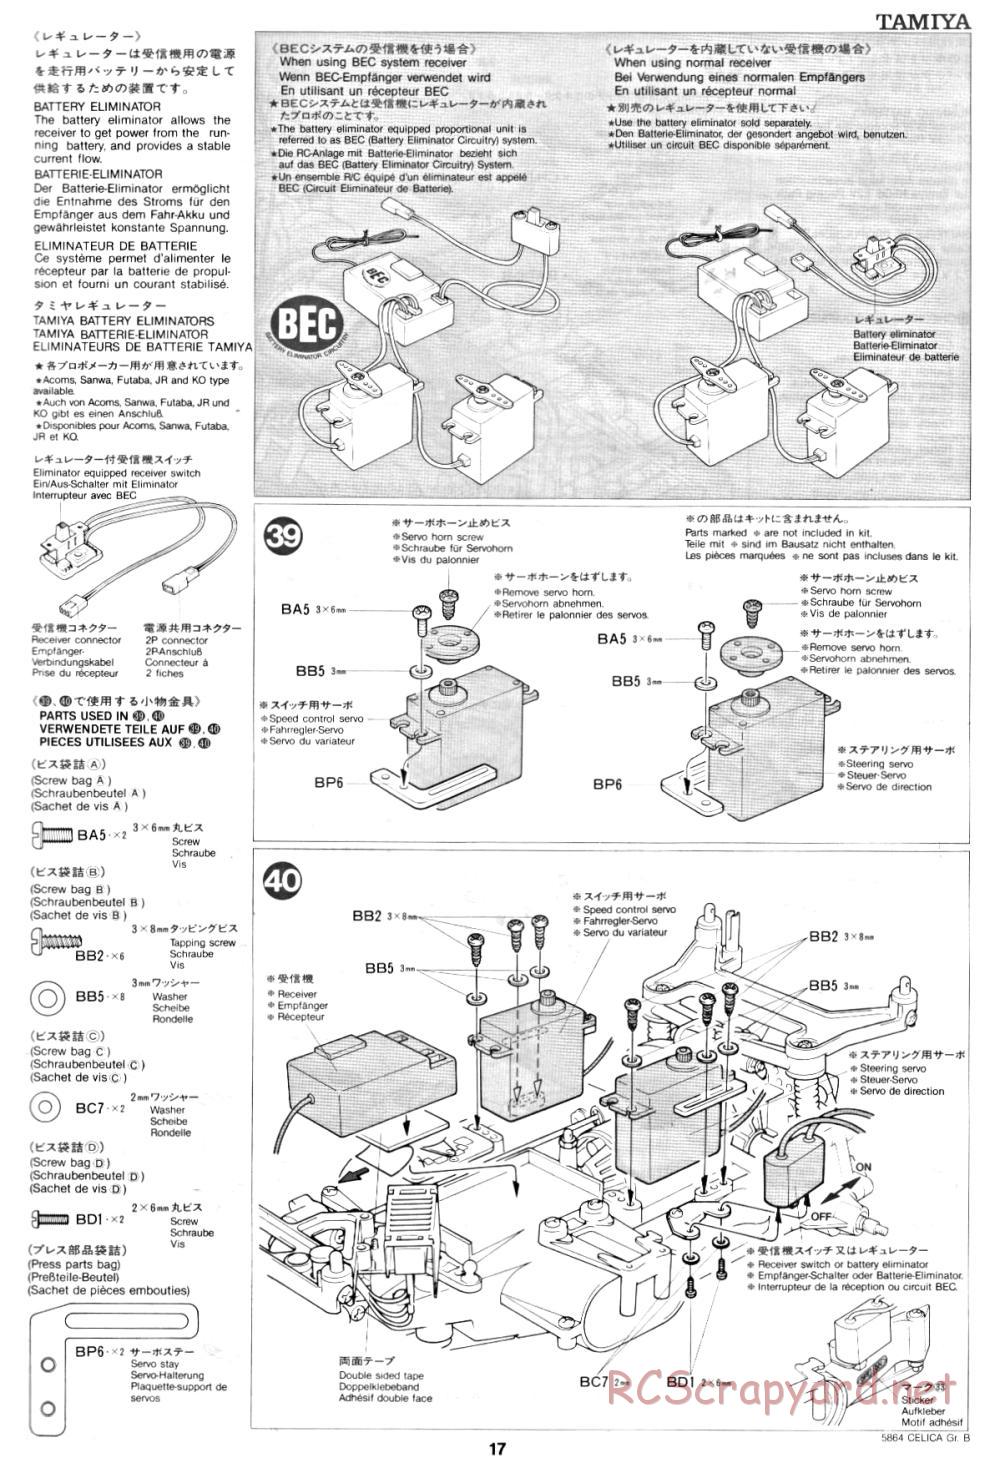 Tamiya - Toyota Celica Gr.B Rally Special - 58064 - Manual - Page 17